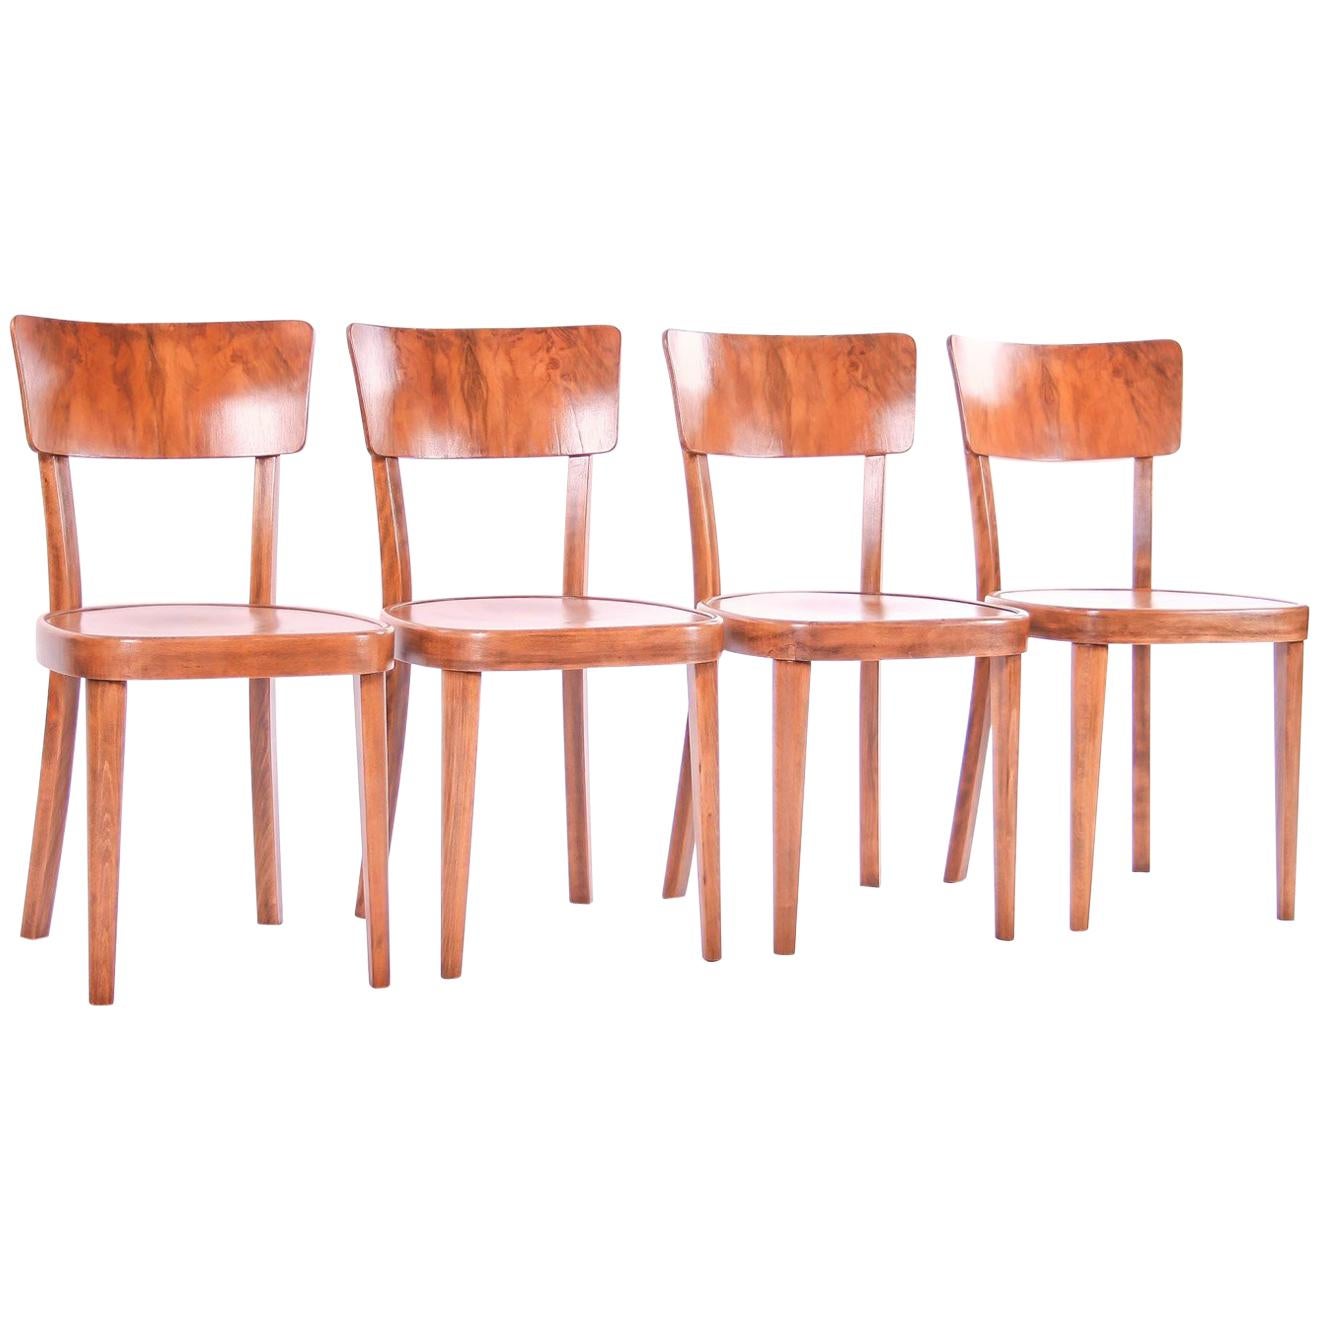 Czech Interwar Avantgard Design Dining Chairs by Jindrich Halabala 'UP Zavody' For Sale